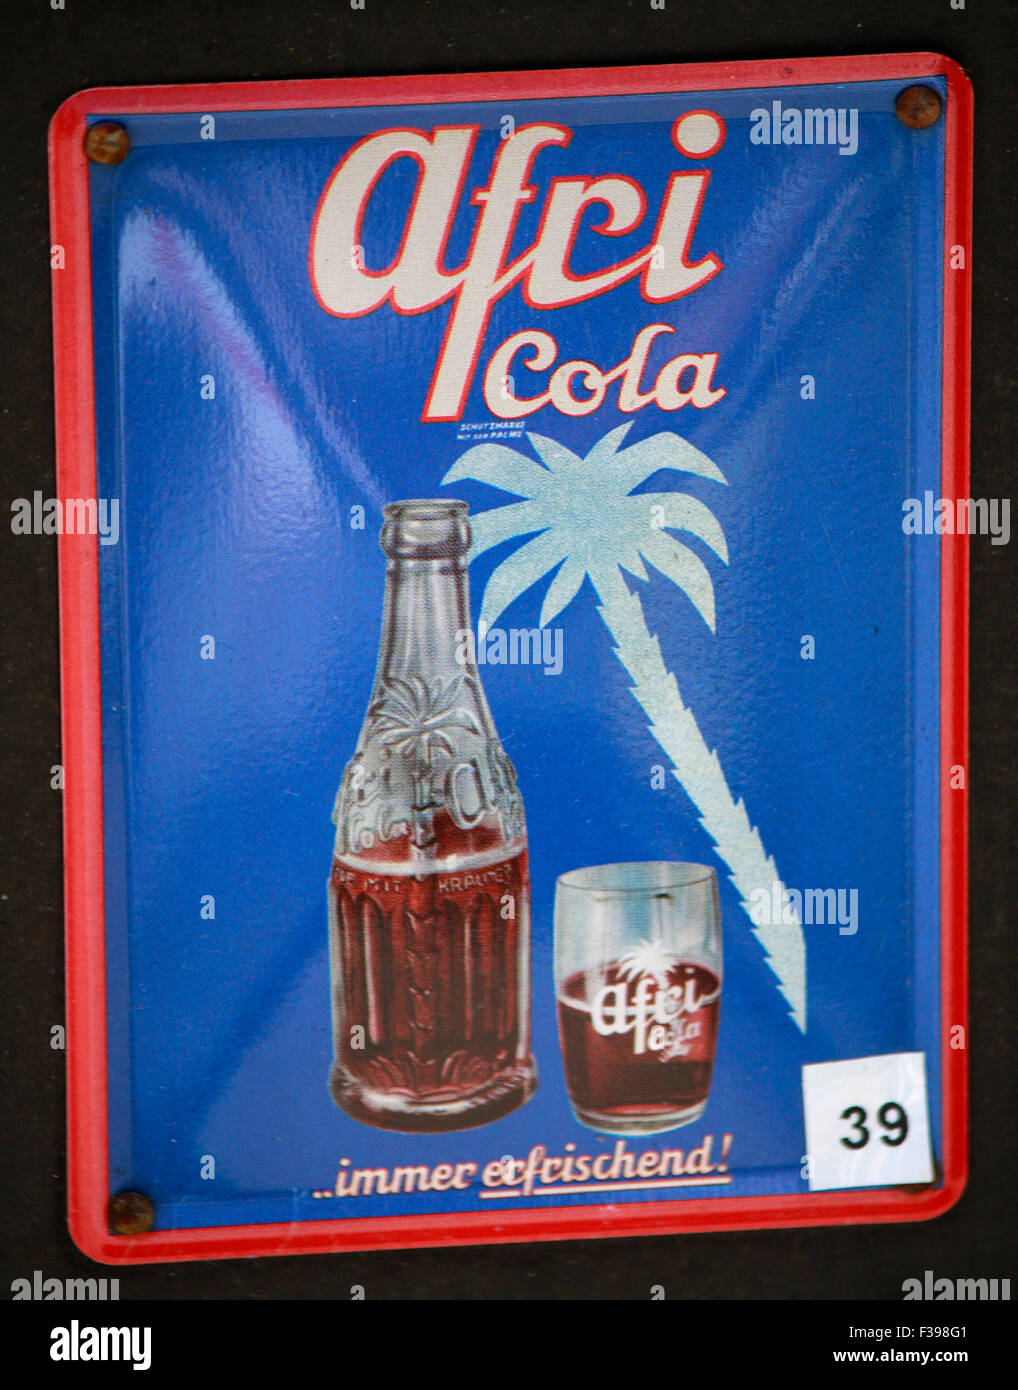 https://c8.alamy.com/comp/F398G1/das-logo-der-marke-afri-cola-berlin-F398G1.jpg